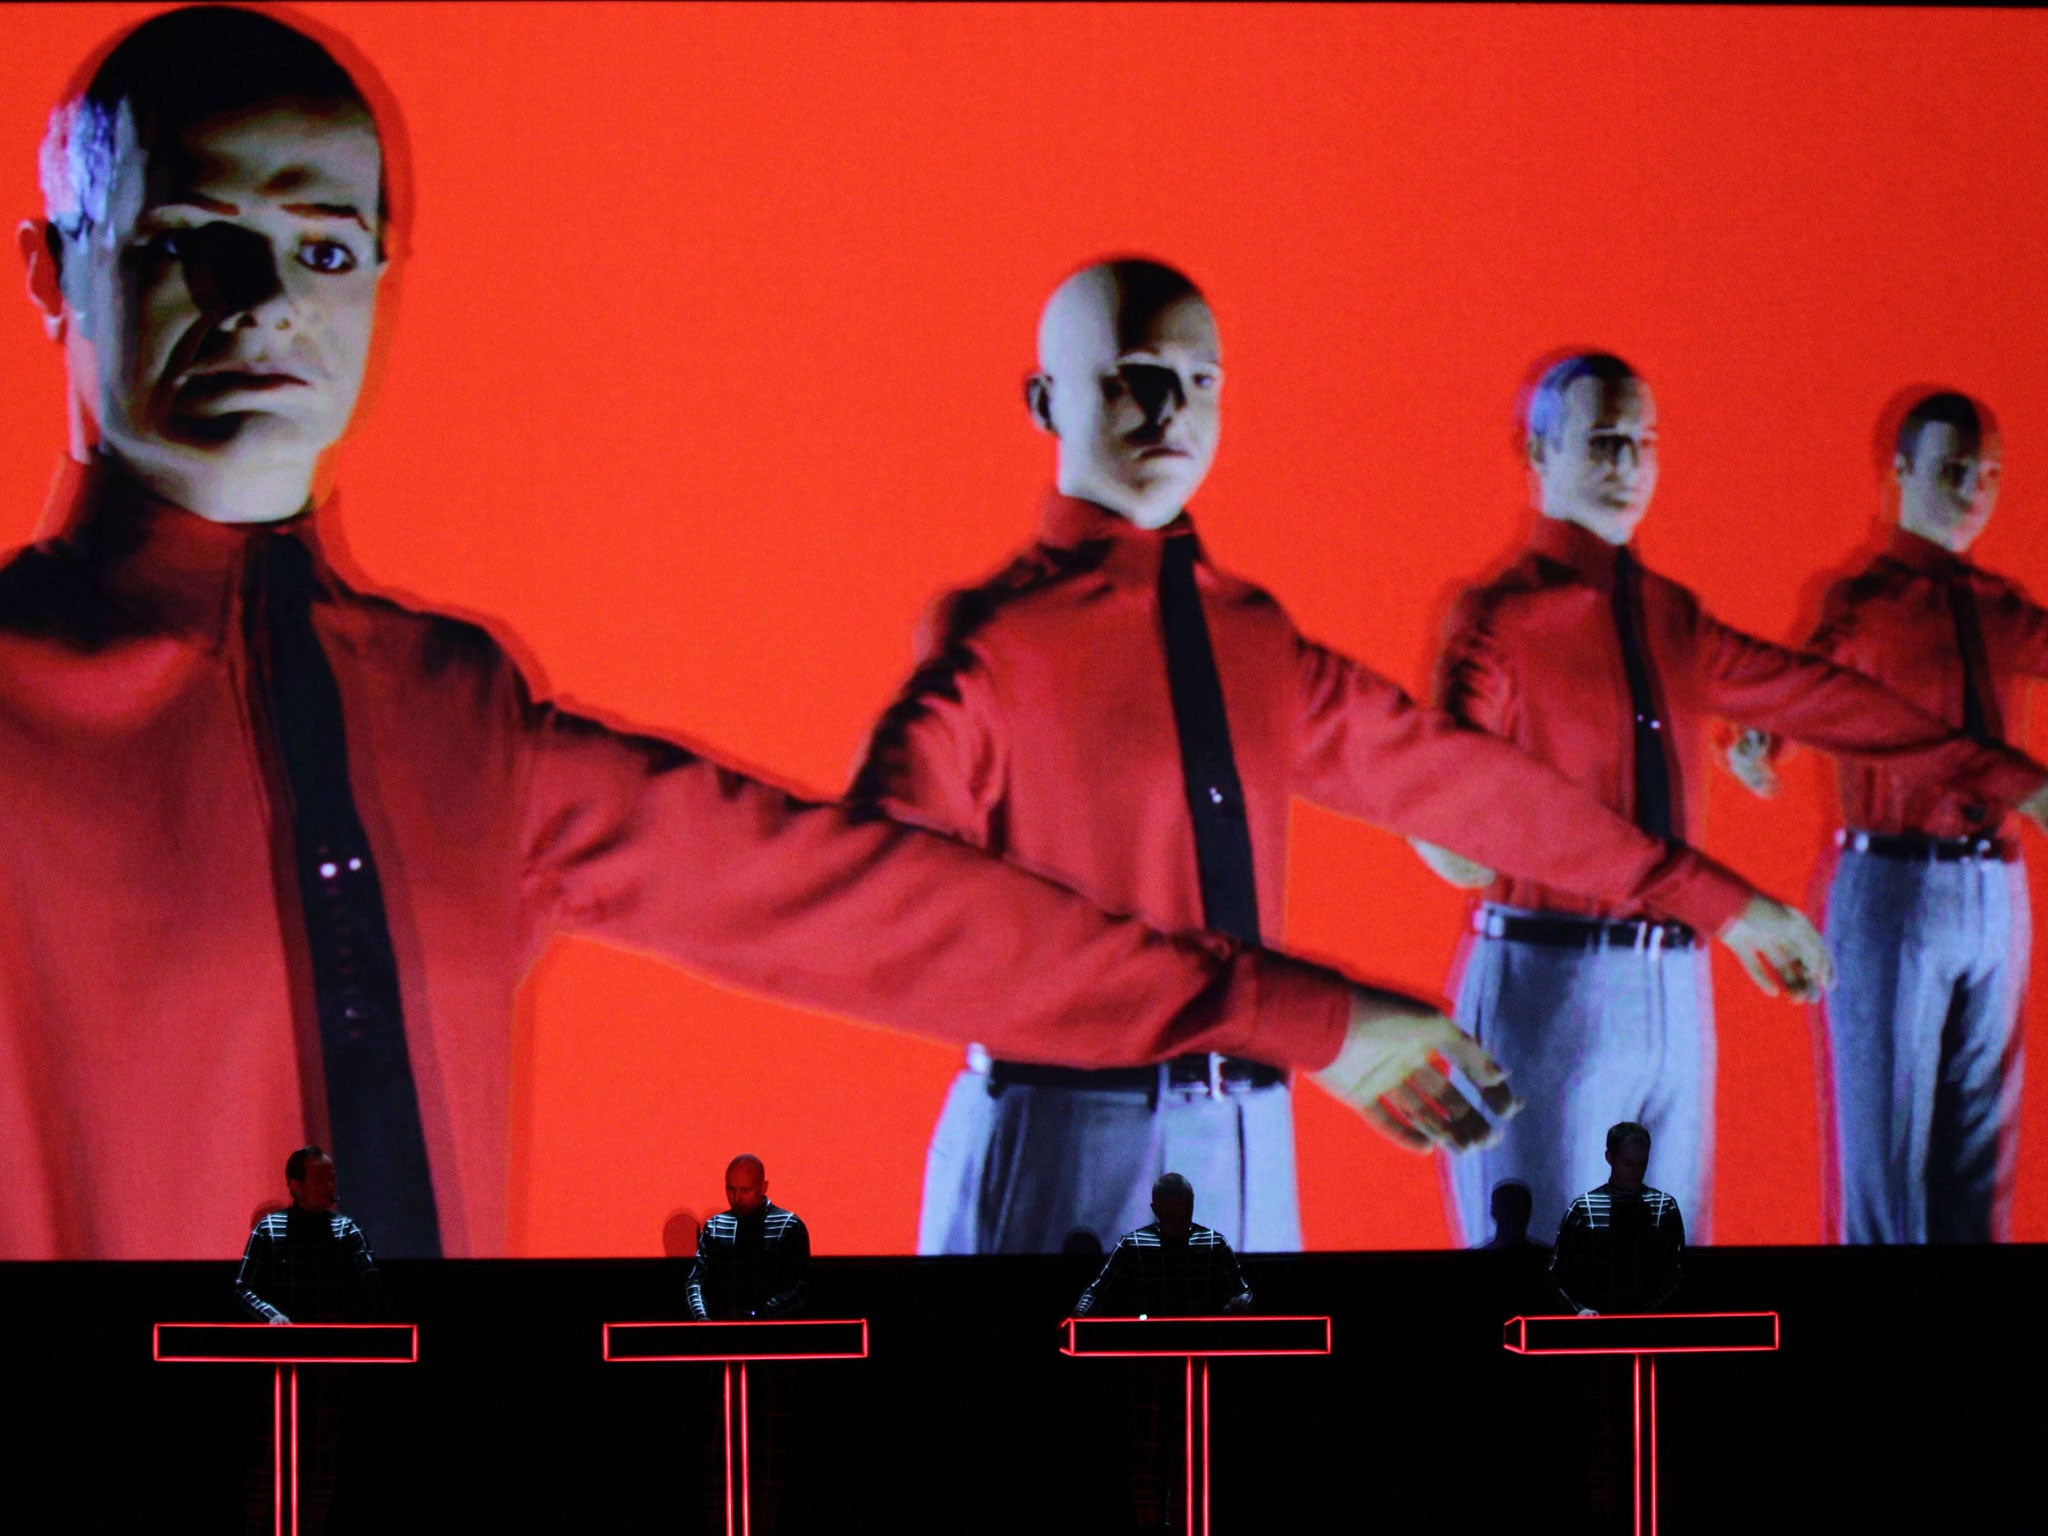 German electronic-music pioneers Kraftwerk perform in the Turbine Hall of Tate Modern against a giant backdrop